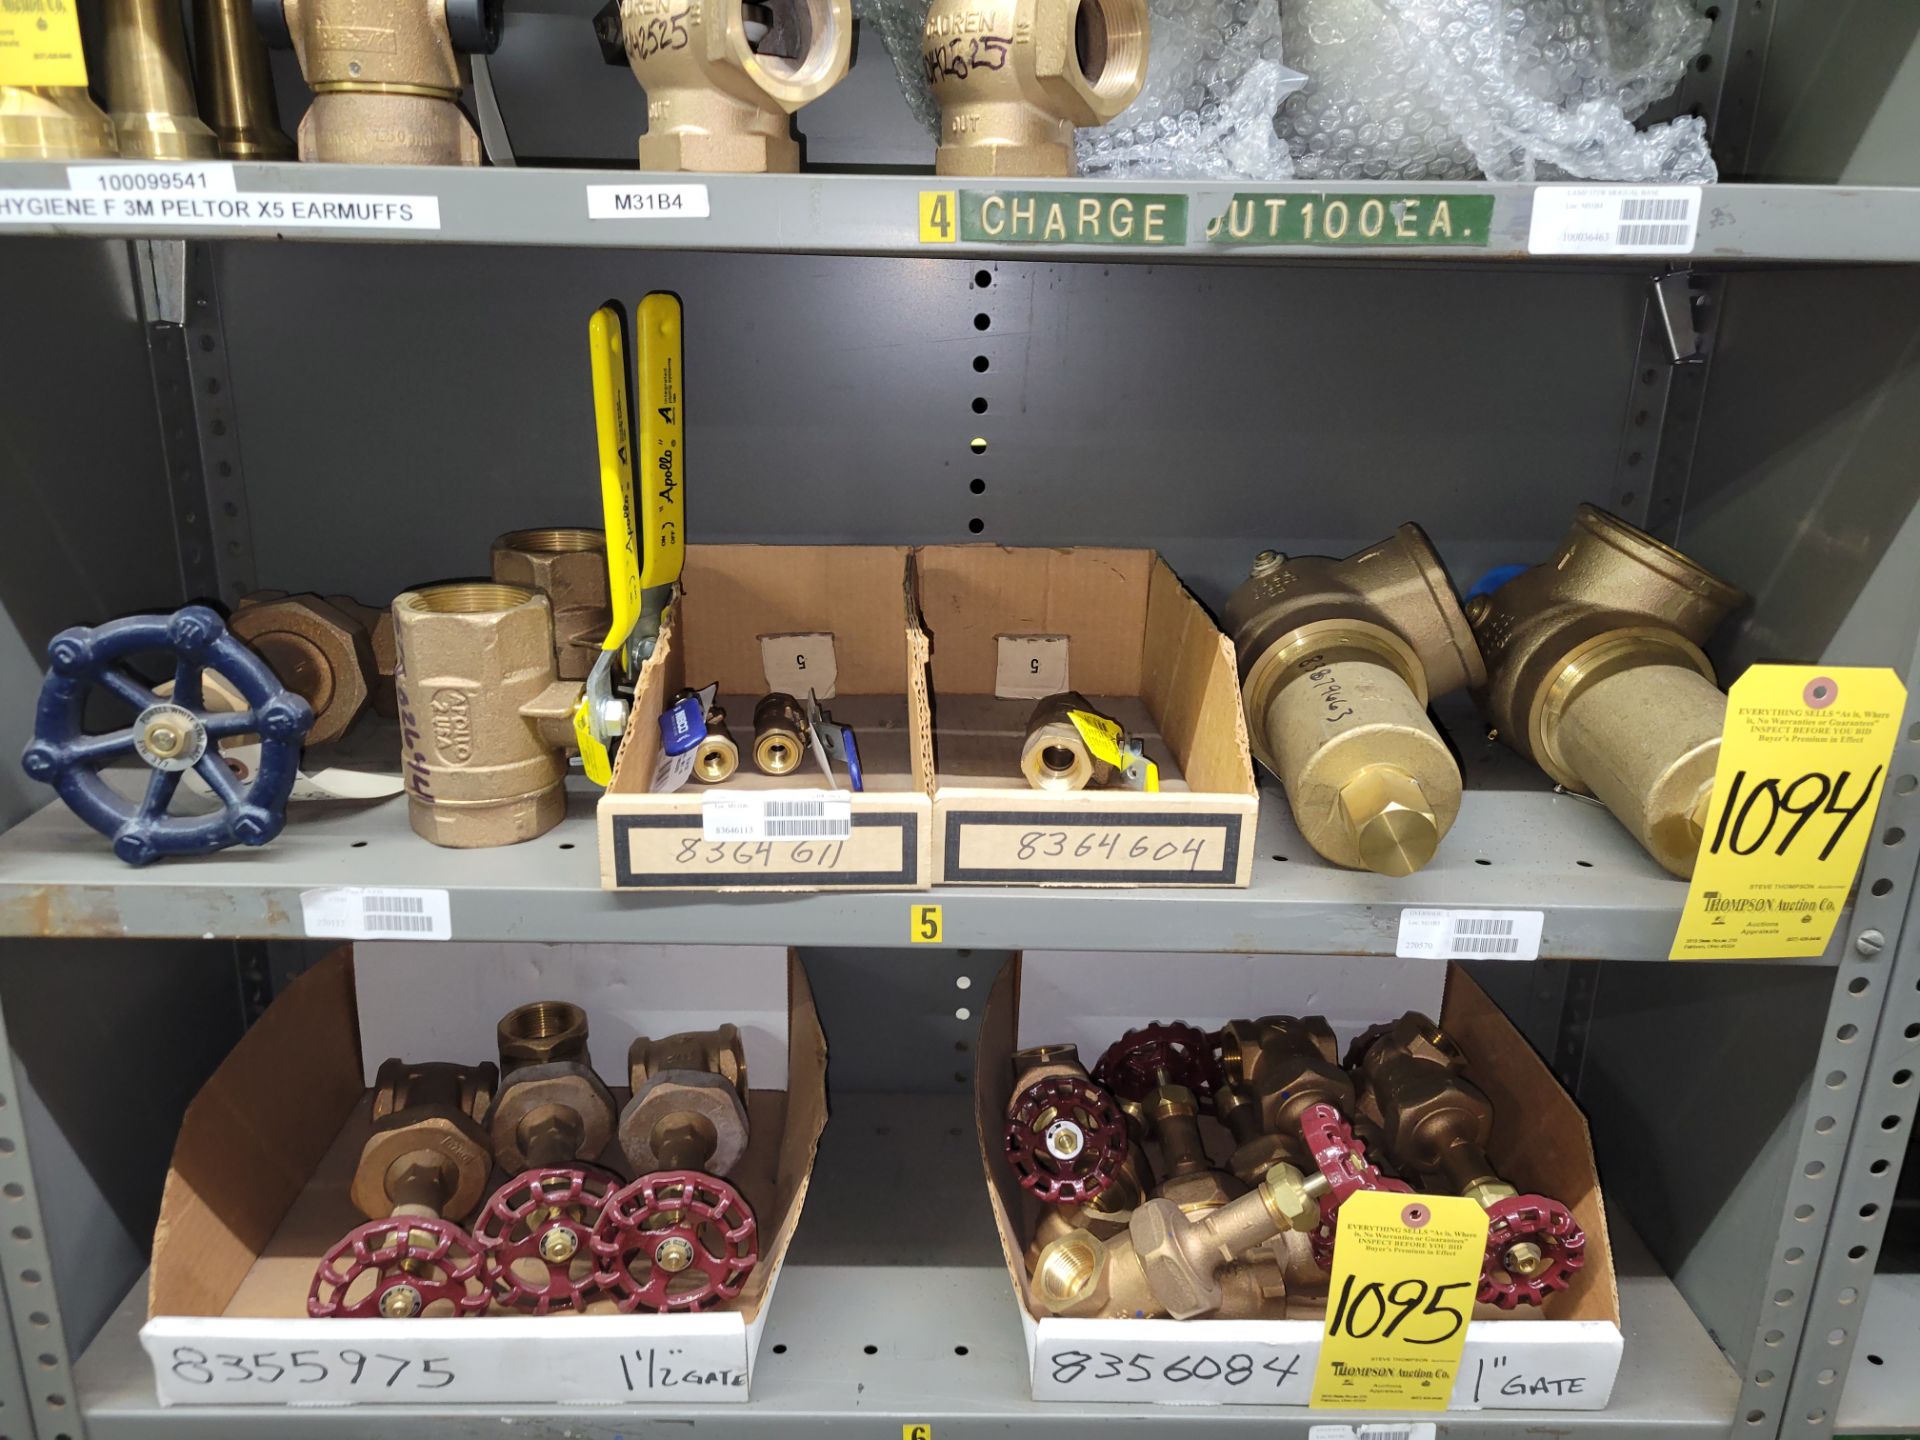 Lot - Brass Pipe Valves on (1) Shelf